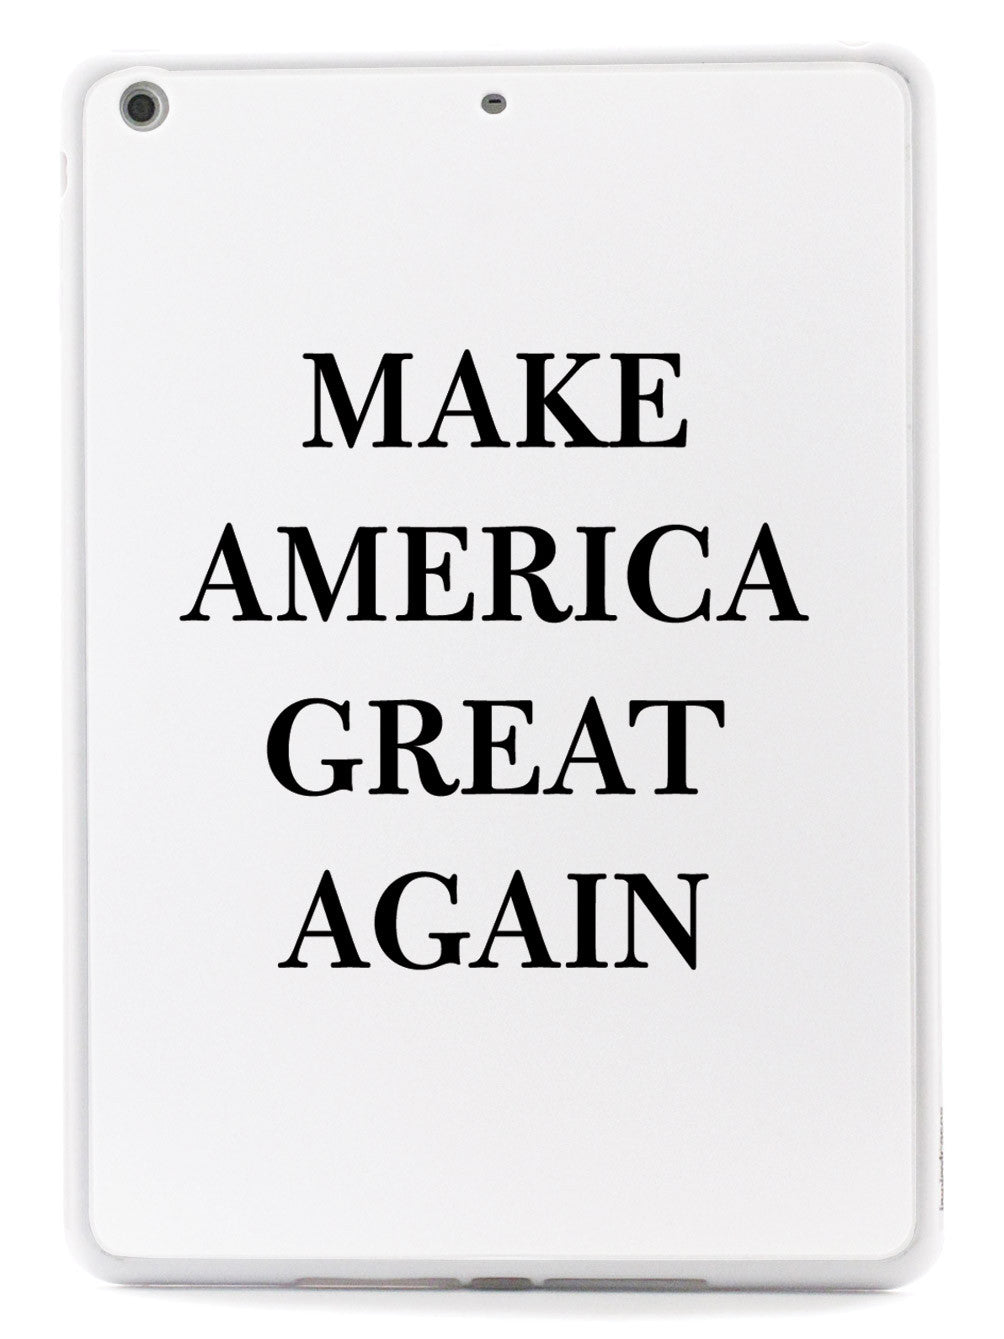 Make America Great Again - White Case